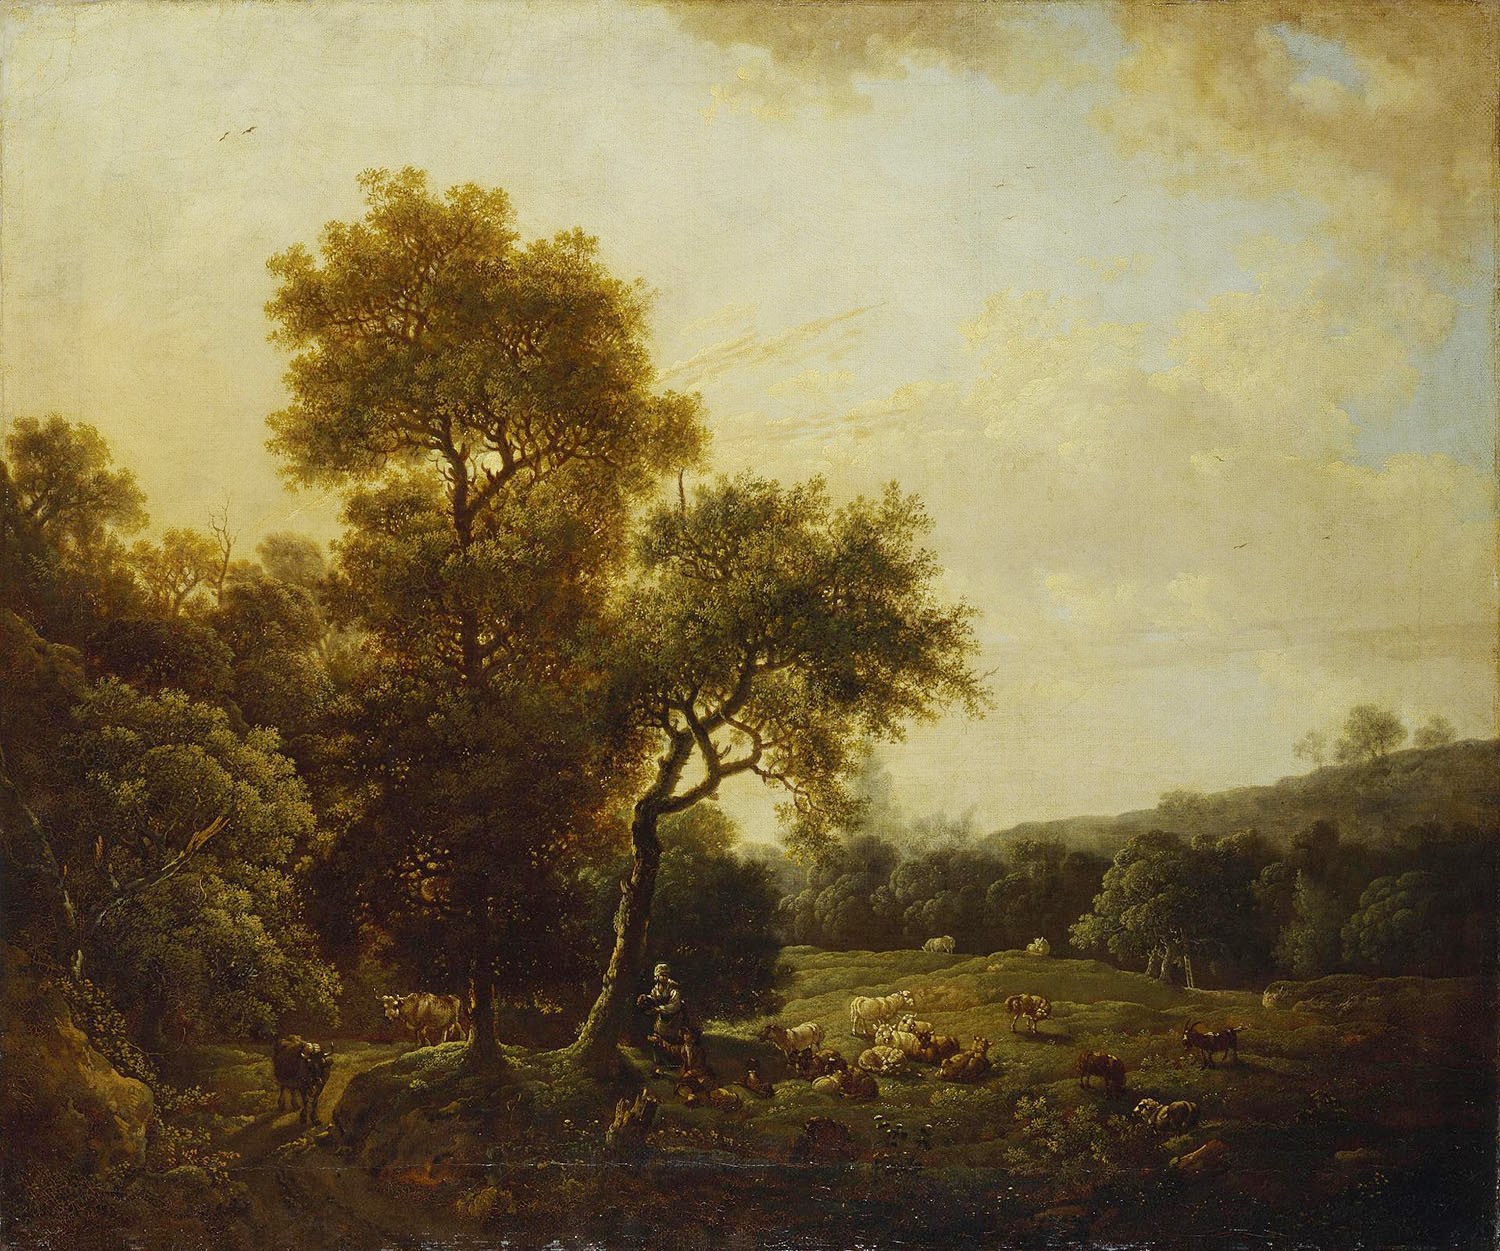 Иоганн Христиан Кленгель. "Пейзаж". 1773.